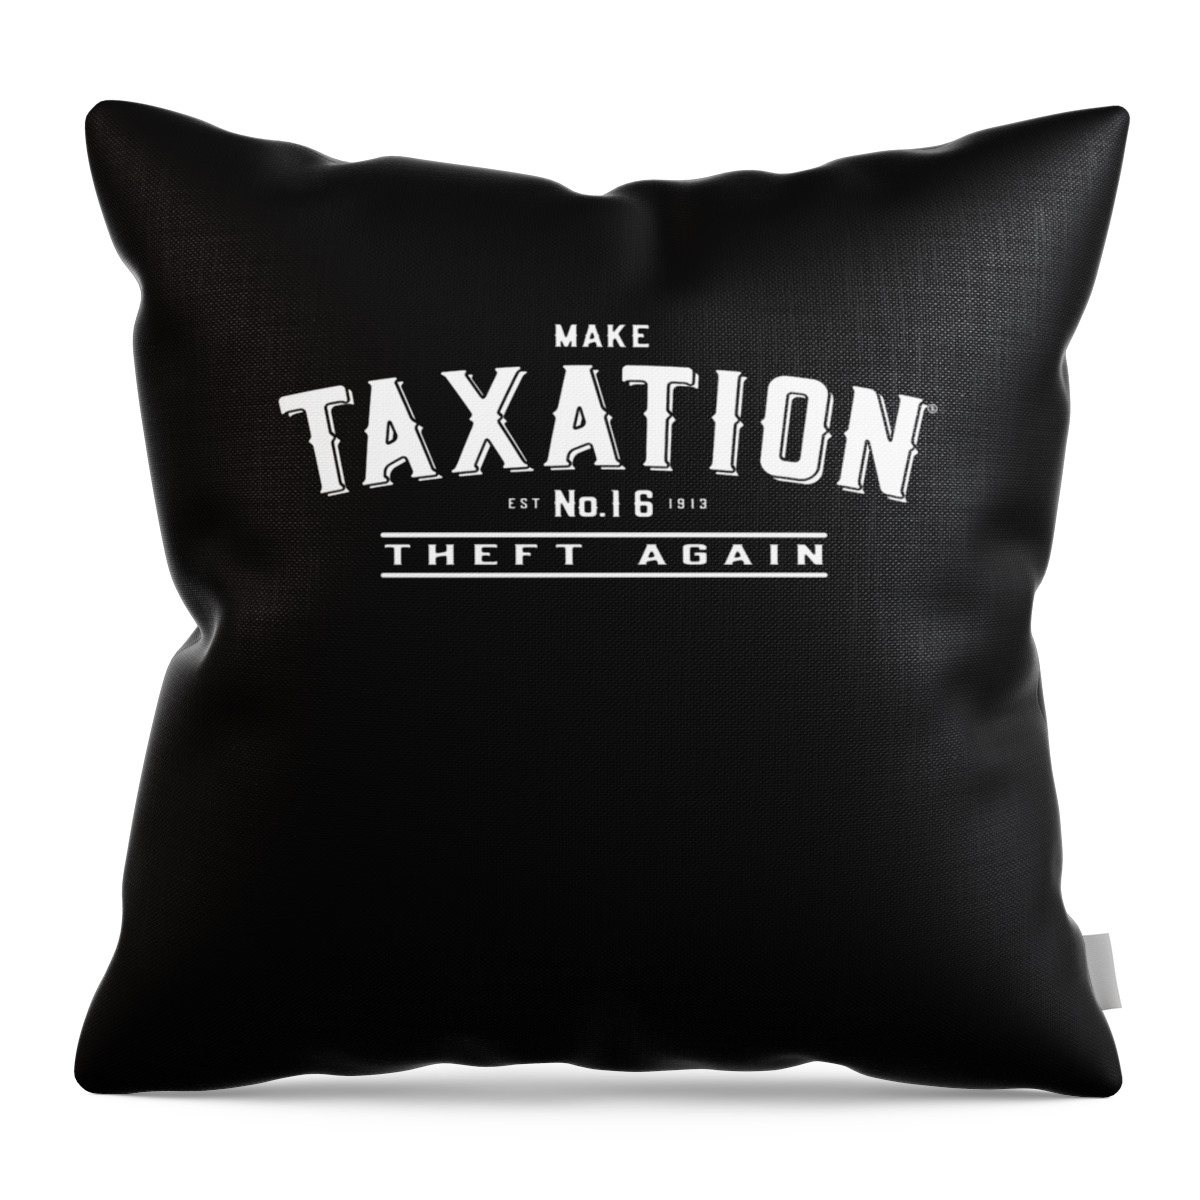 Cool Throw Pillow featuring the digital art Make Taxation Theft Again #1 by Flippin Sweet Gear